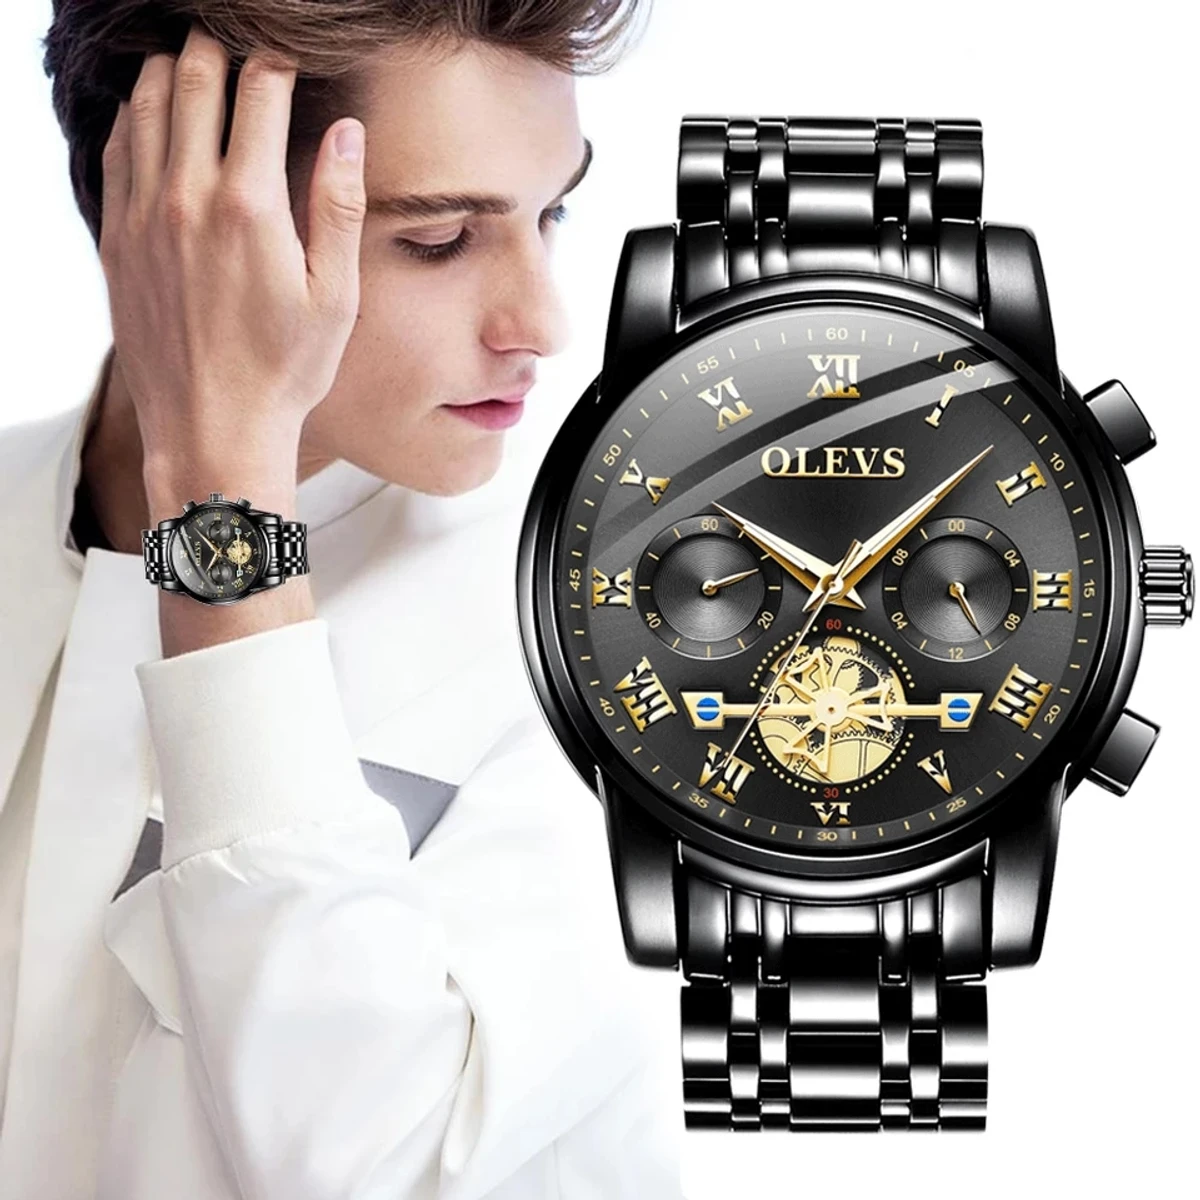 Olevs 2859 Stainless Steel premium quality waterproof Chronograph Watch- Black